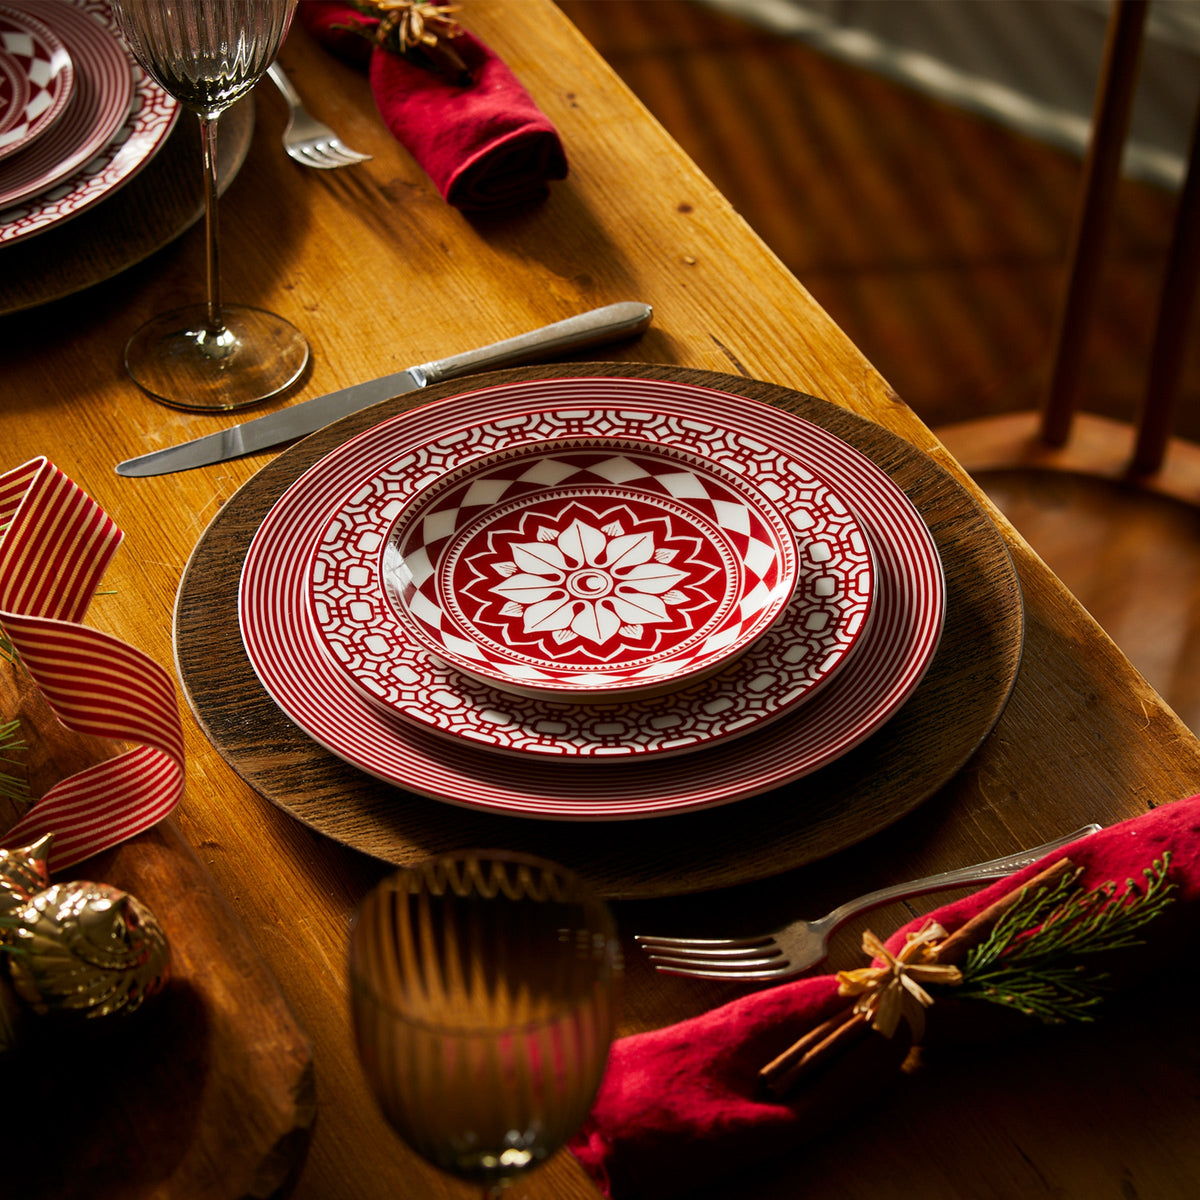 A Fez Crimson Canapé plate on a wooden table.